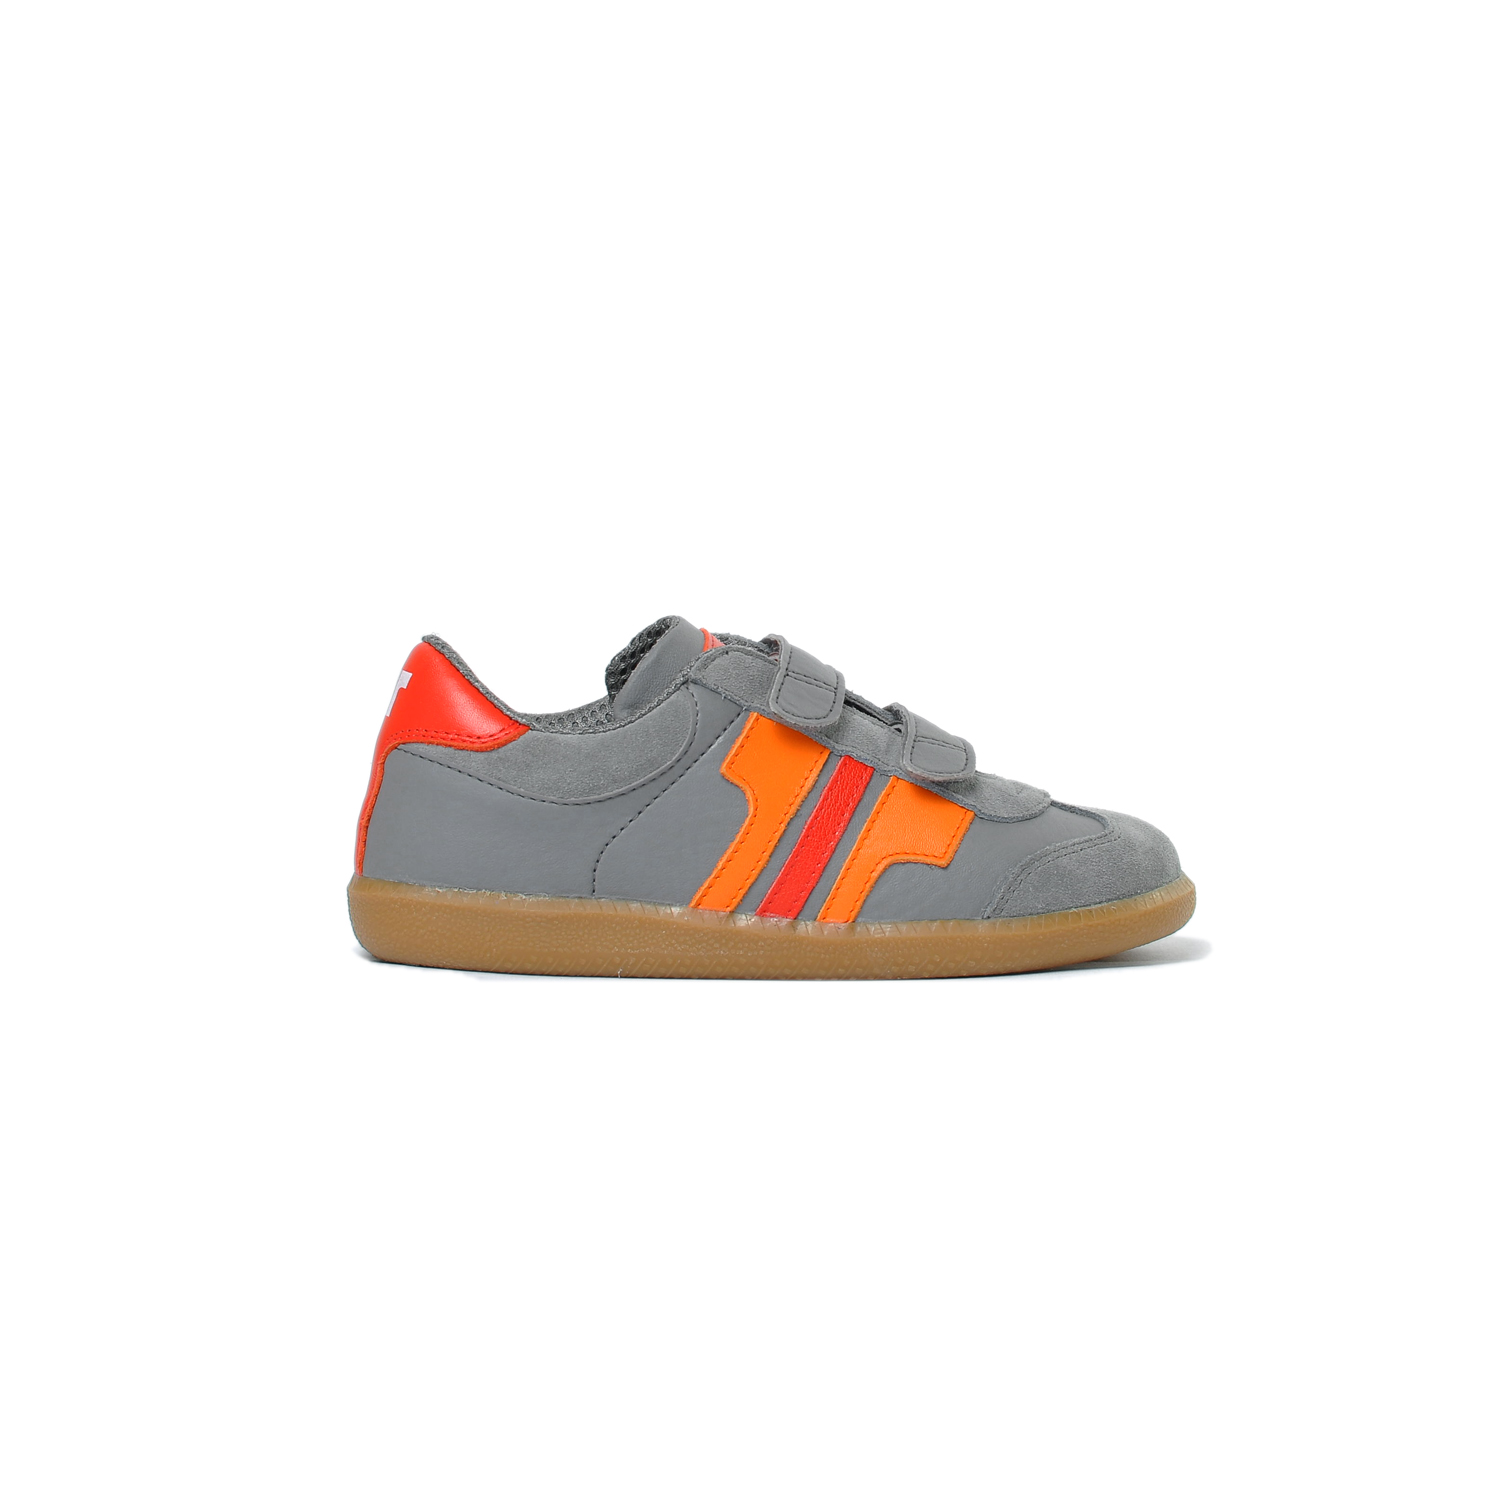 Tisza shoes - Junior - Grey-orange-red